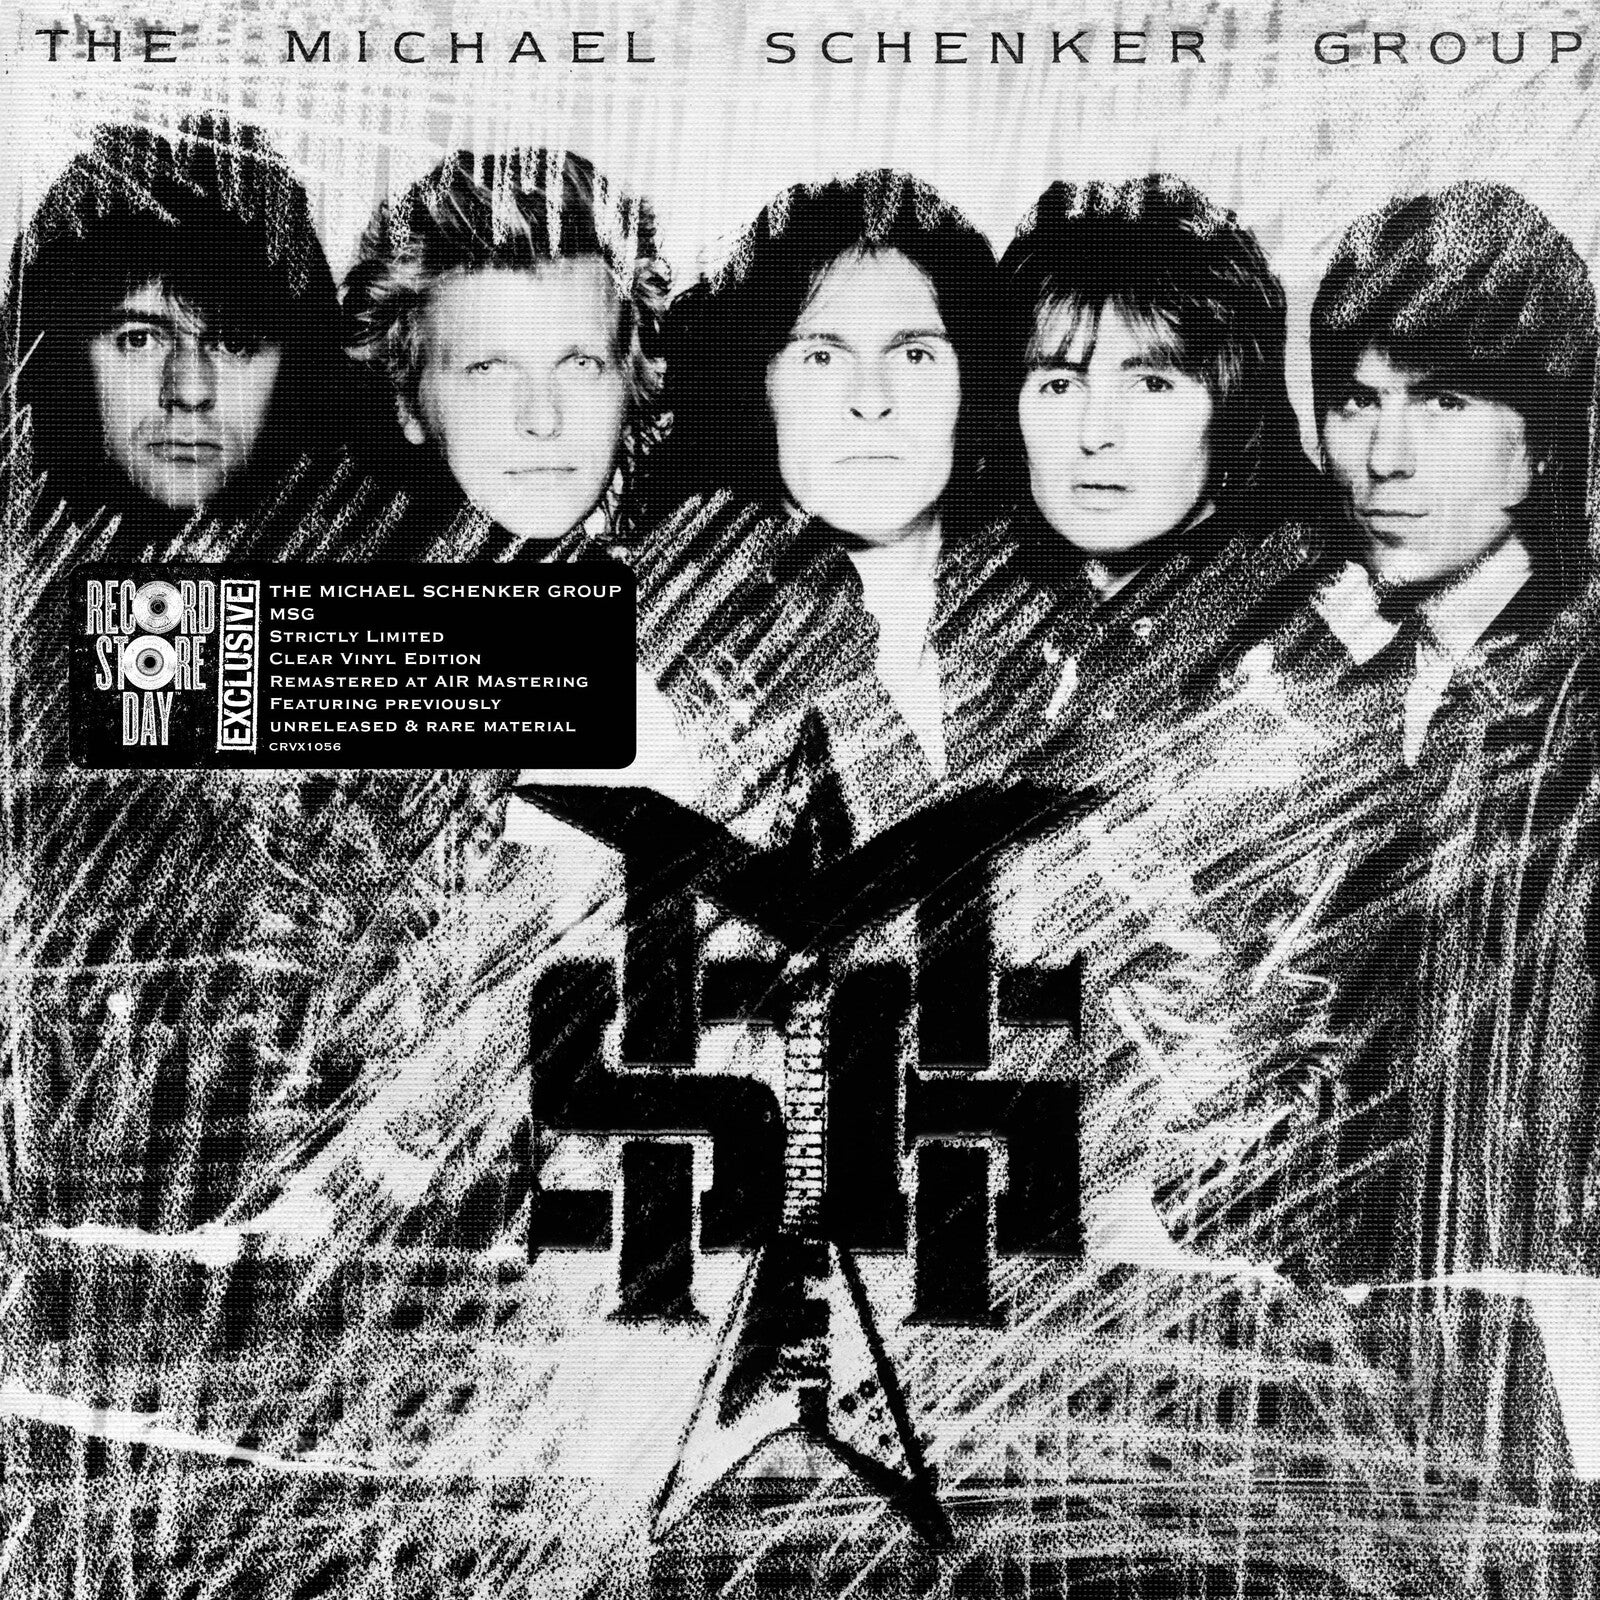 The Michael Schenker Group: MSG – Proper Music